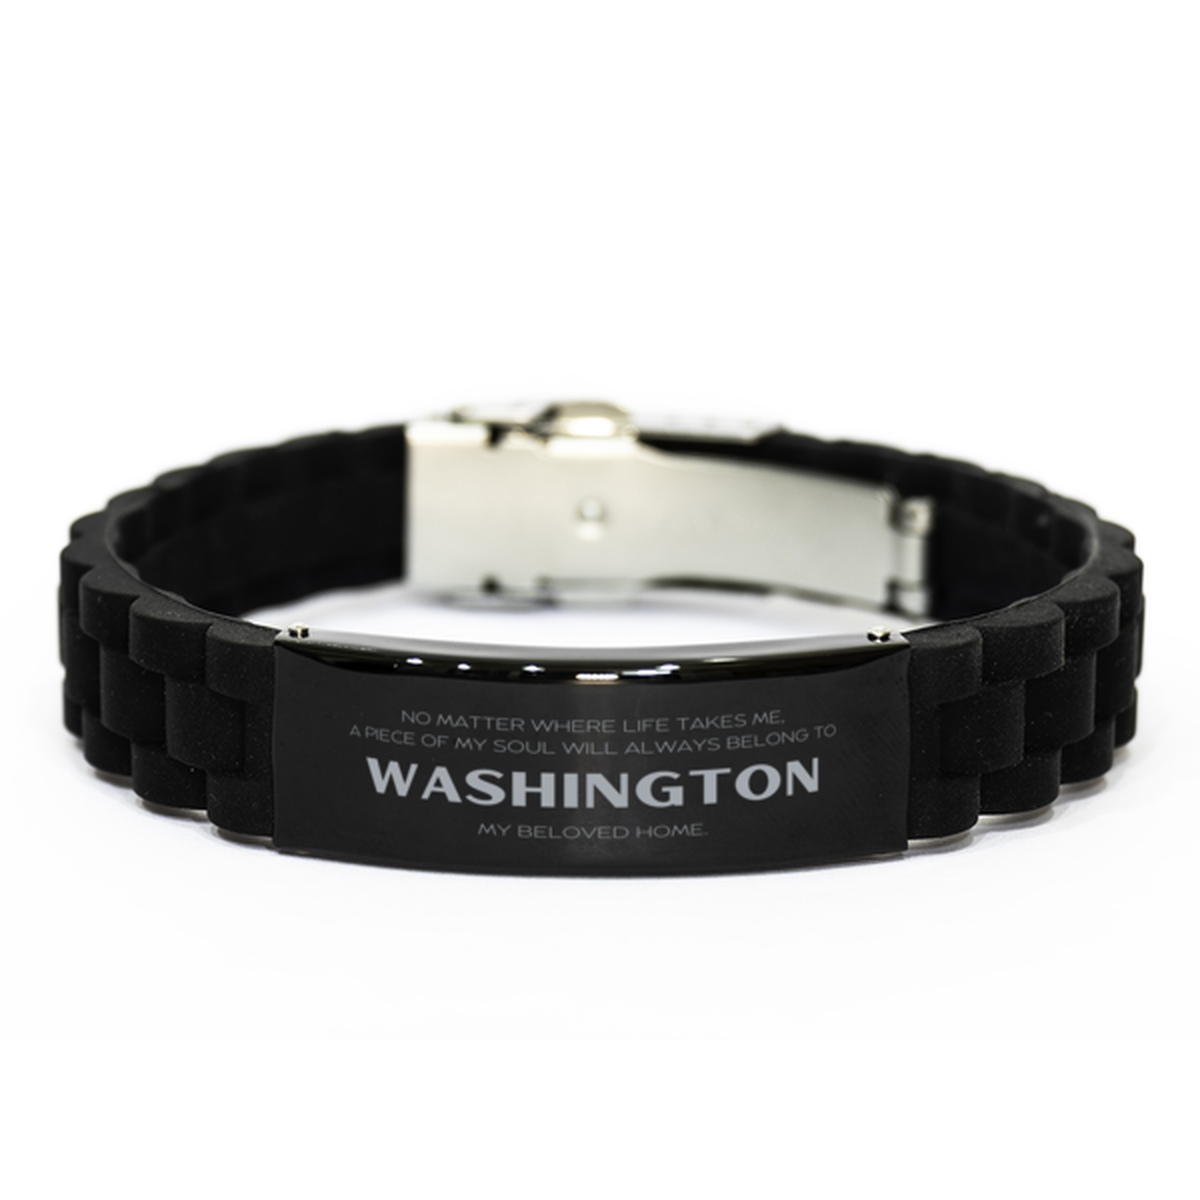 Love Washington State Gifts, My soul will always belong to Washington, Proud Black Glidelock Clasp Bracelet, Birthday Unique Gifts For Washington Men, Women, Friends